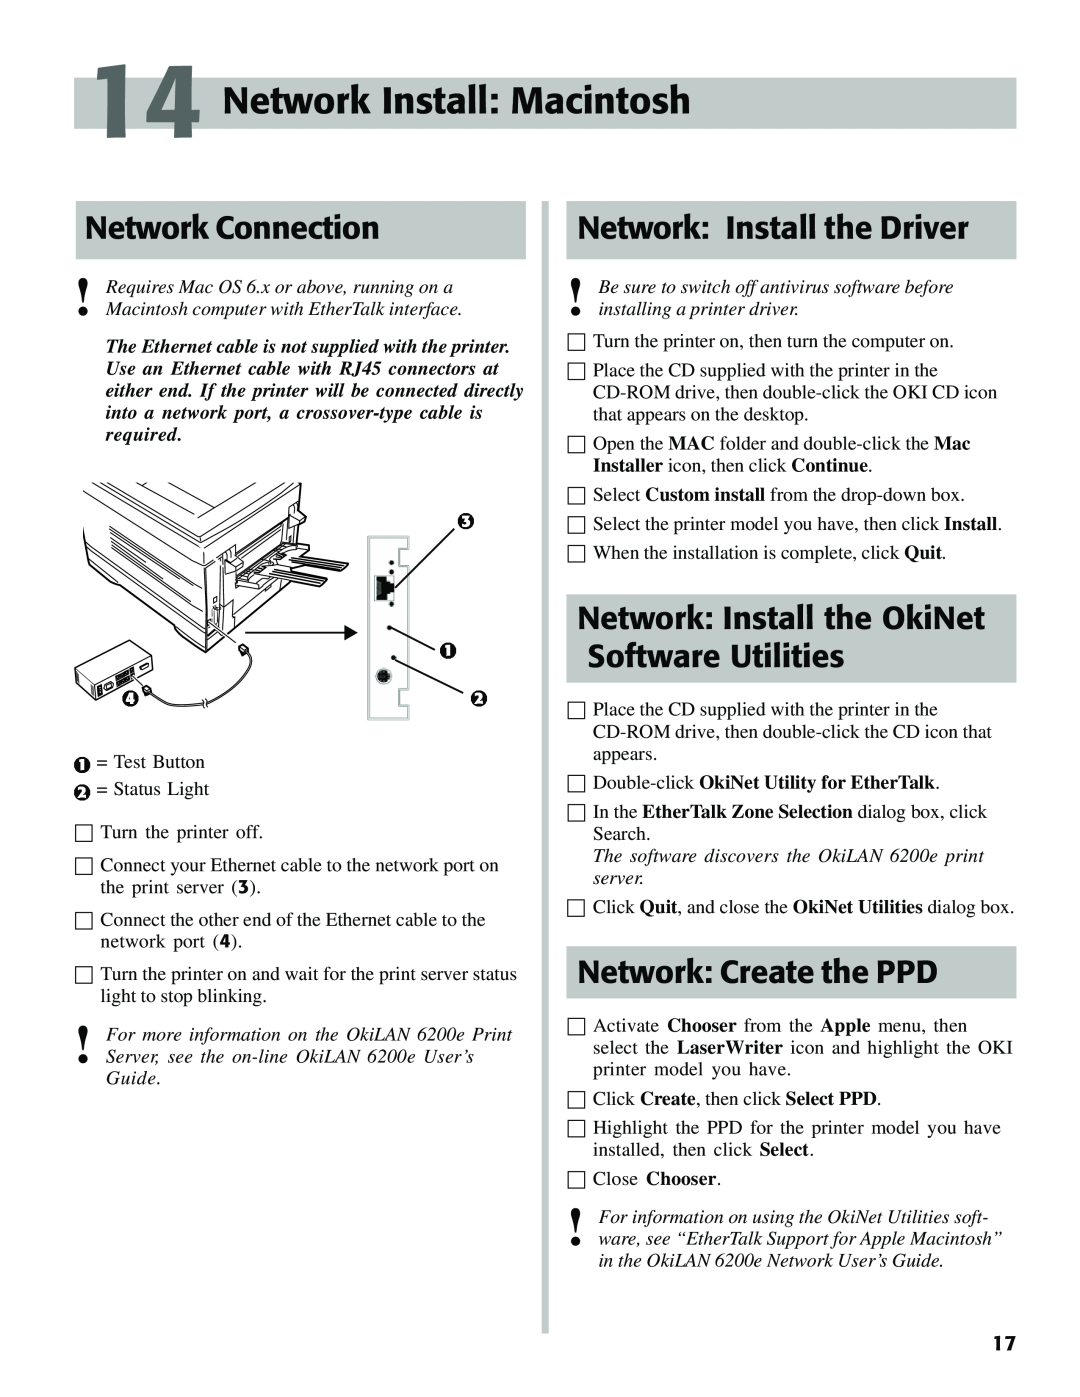 Oki C7000 setup guide Network Install Macintosh, Network Install the Driver, Network Install the OkiNet Software Utilities 